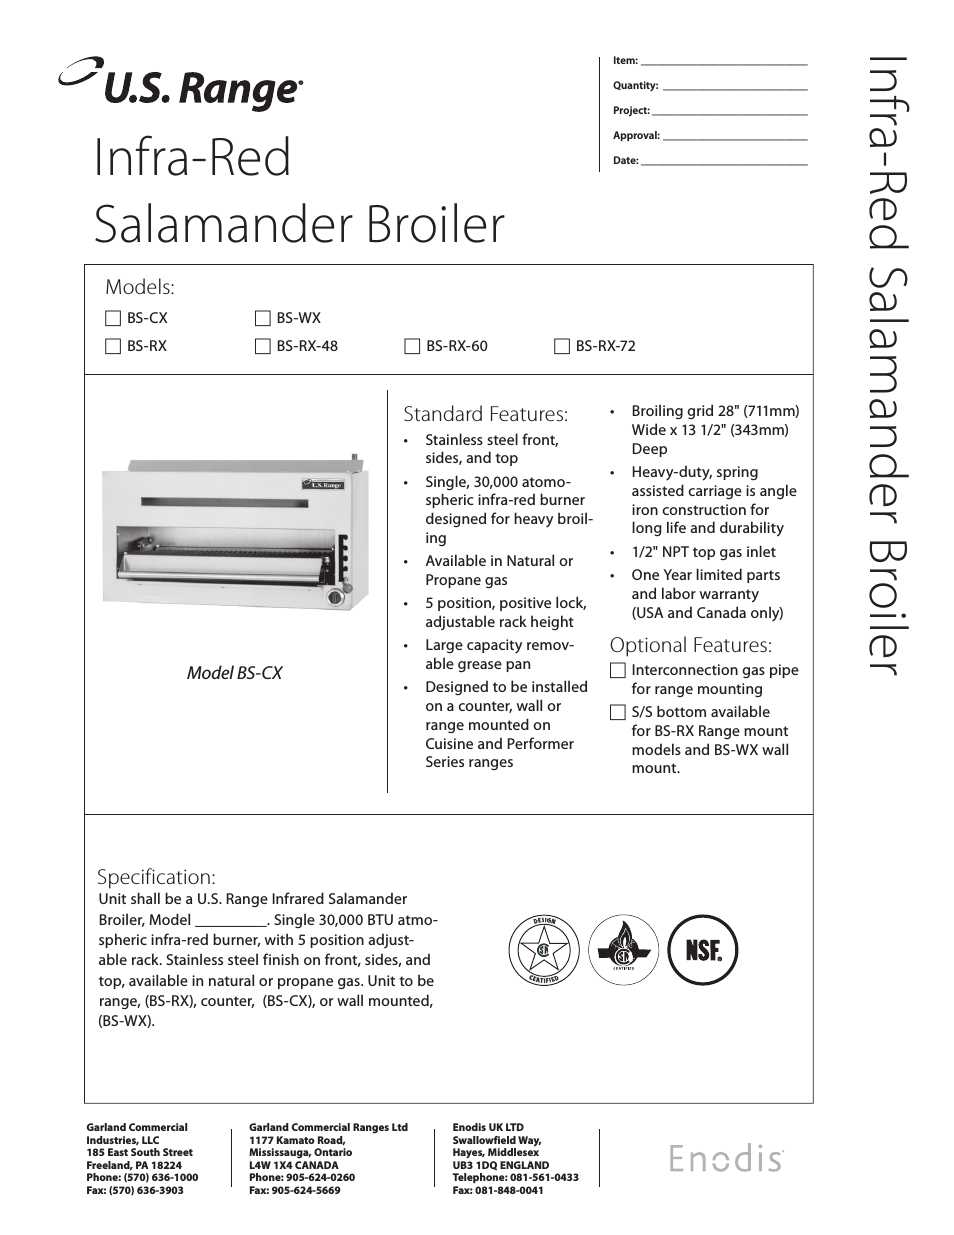 Infra-Red Salamander Broiler BS-RX-72